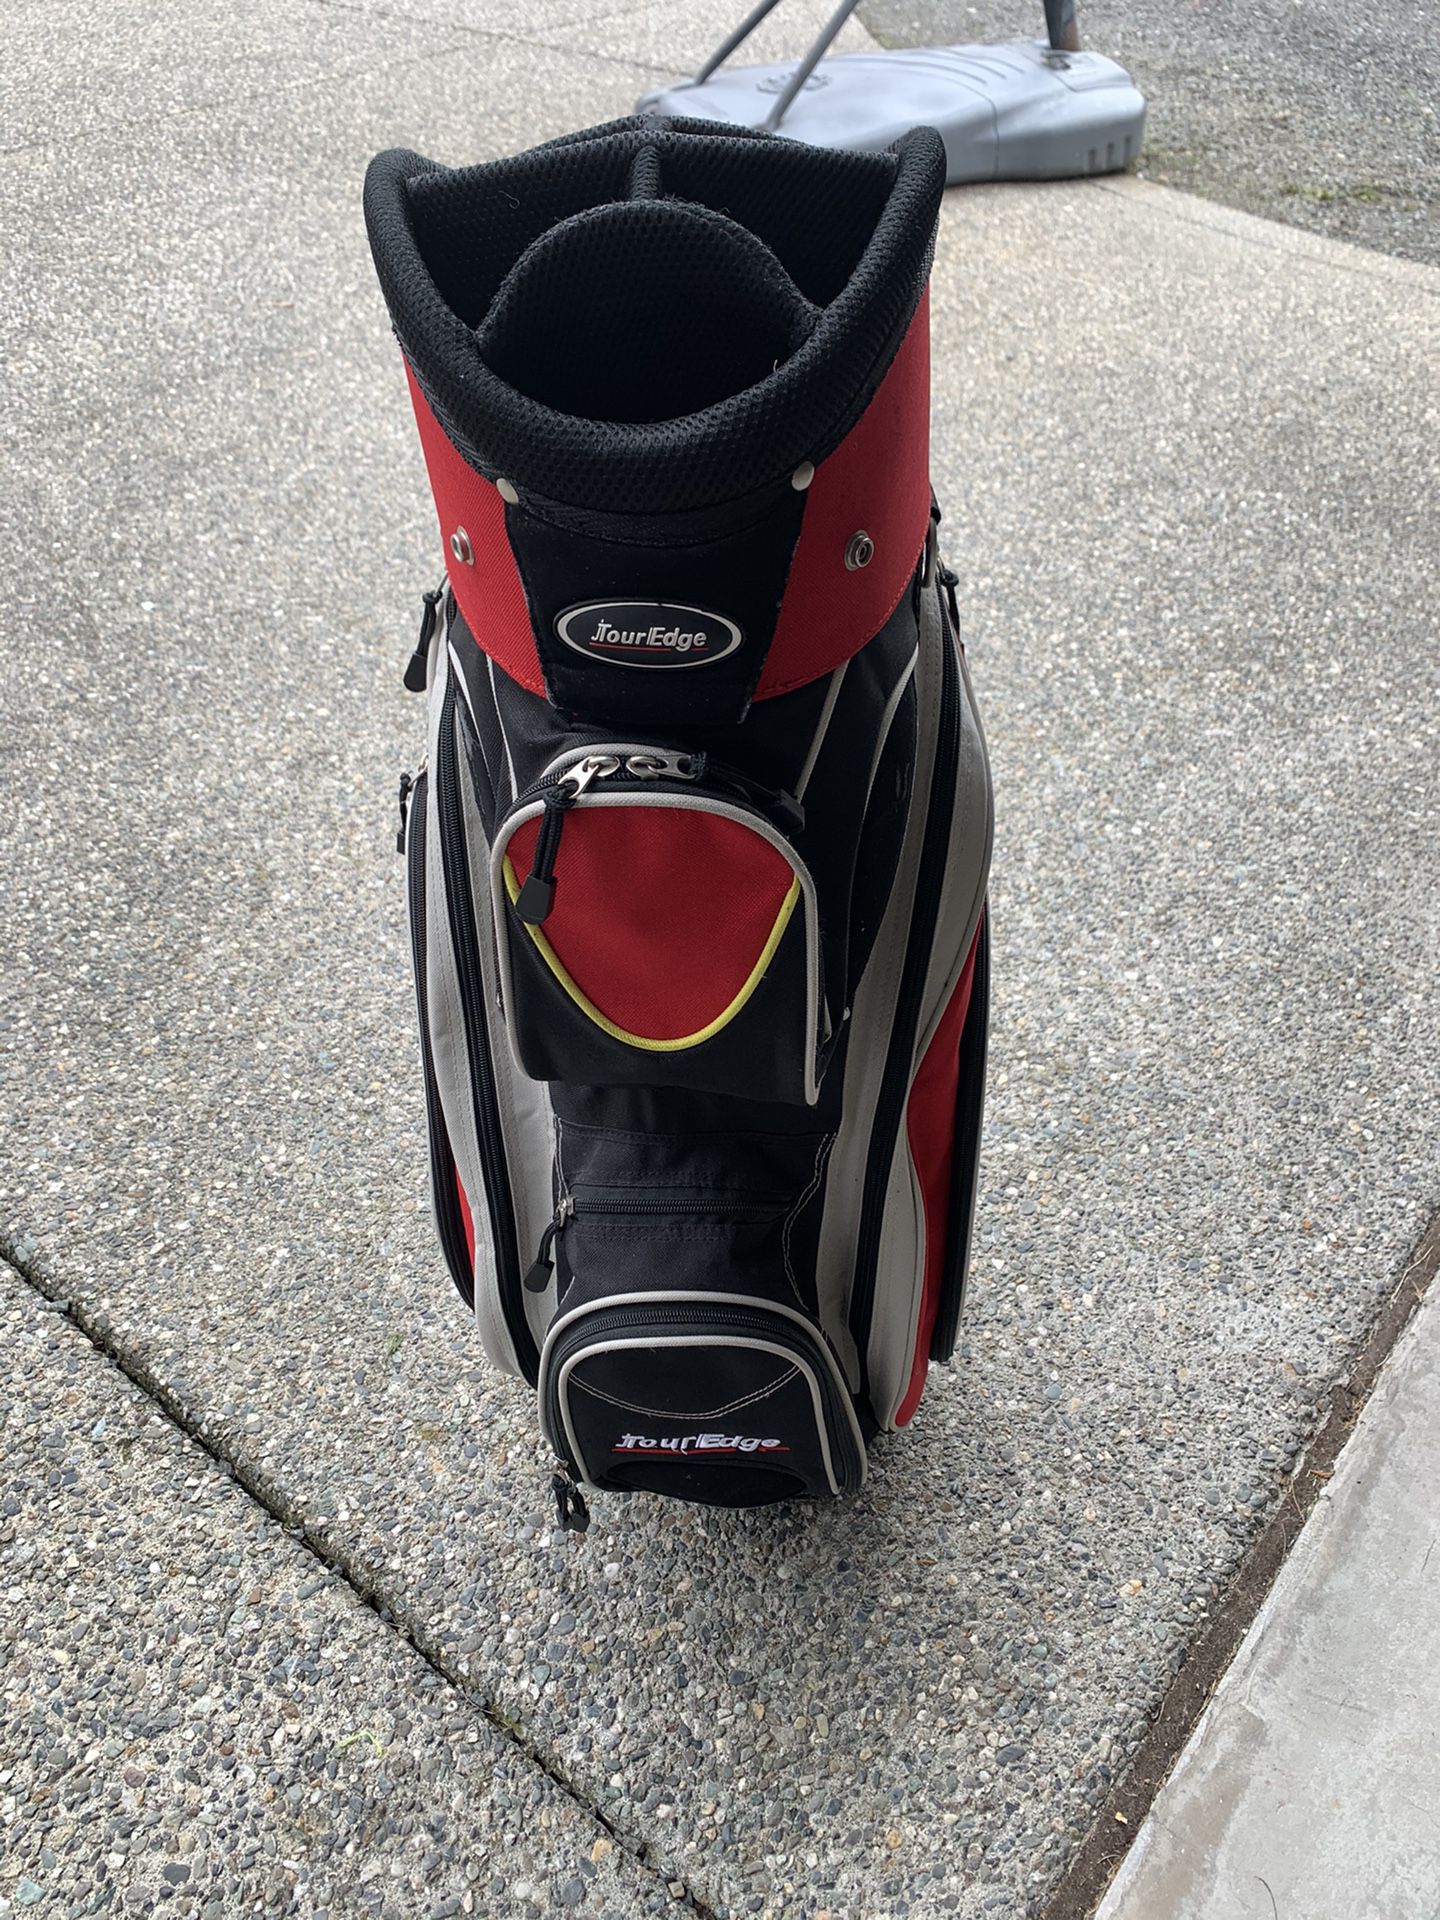 Tour Edge “lift off” golf bag